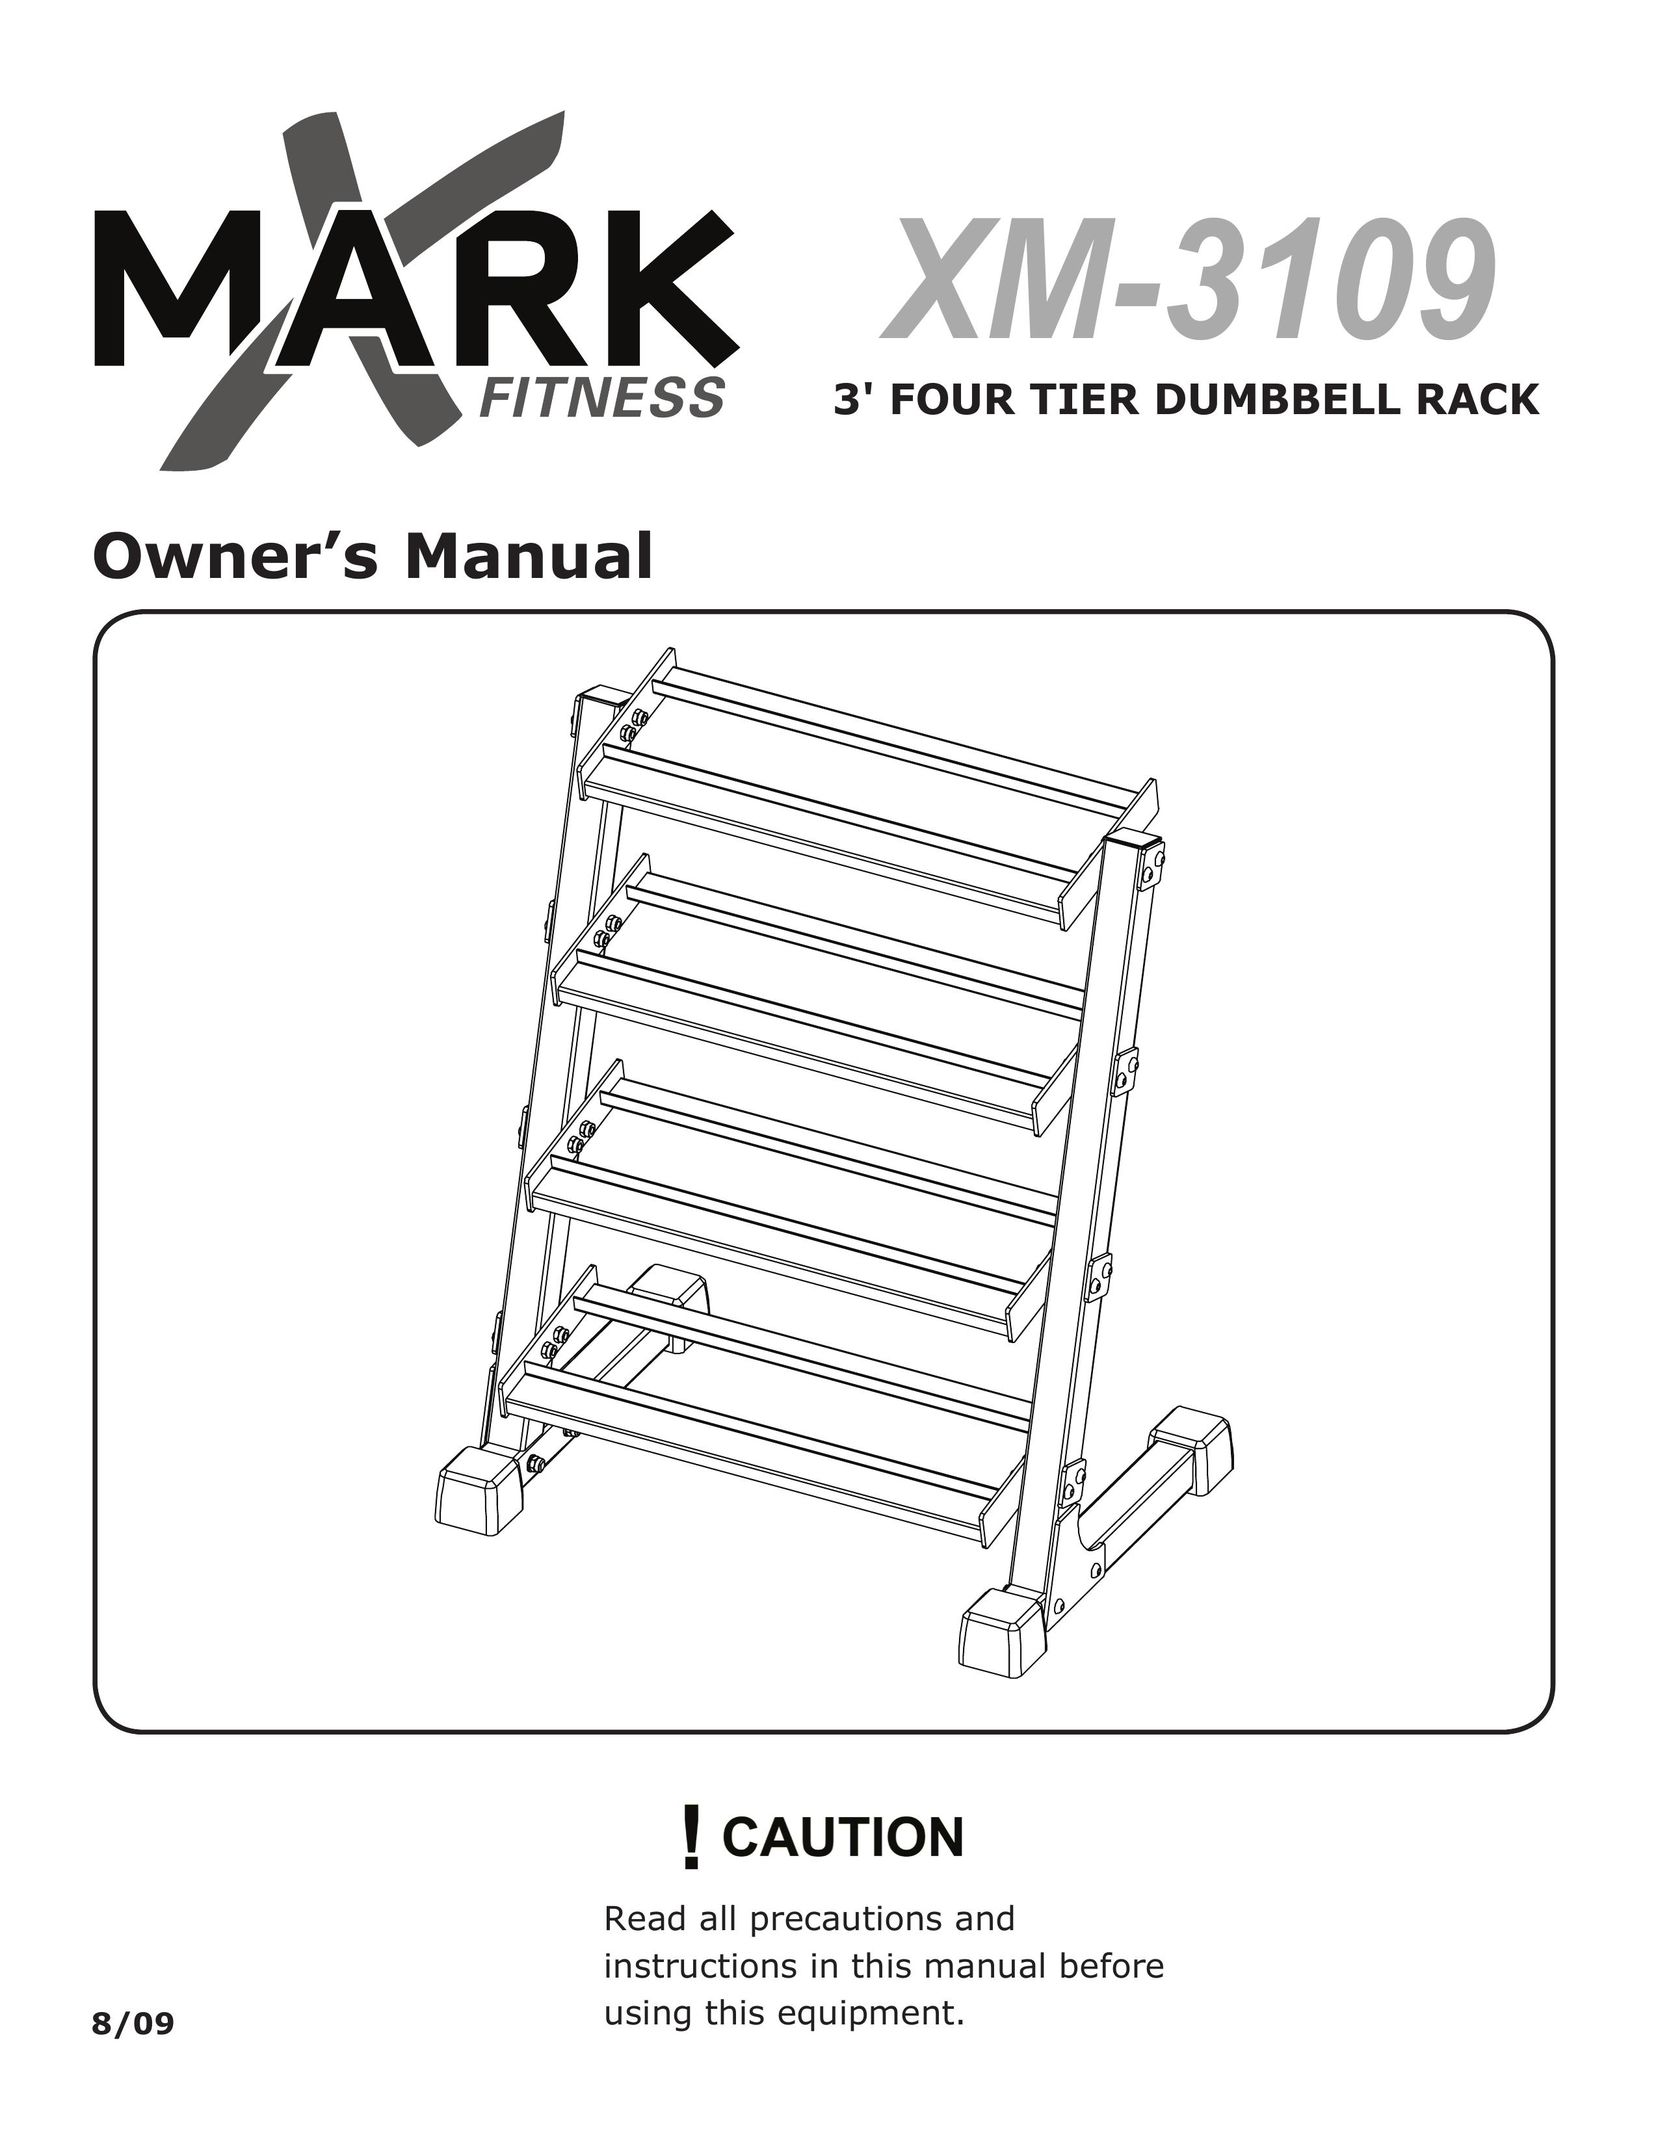 Mark Of Fitness 3' four tier dumbbell rack Home Gym User Manual